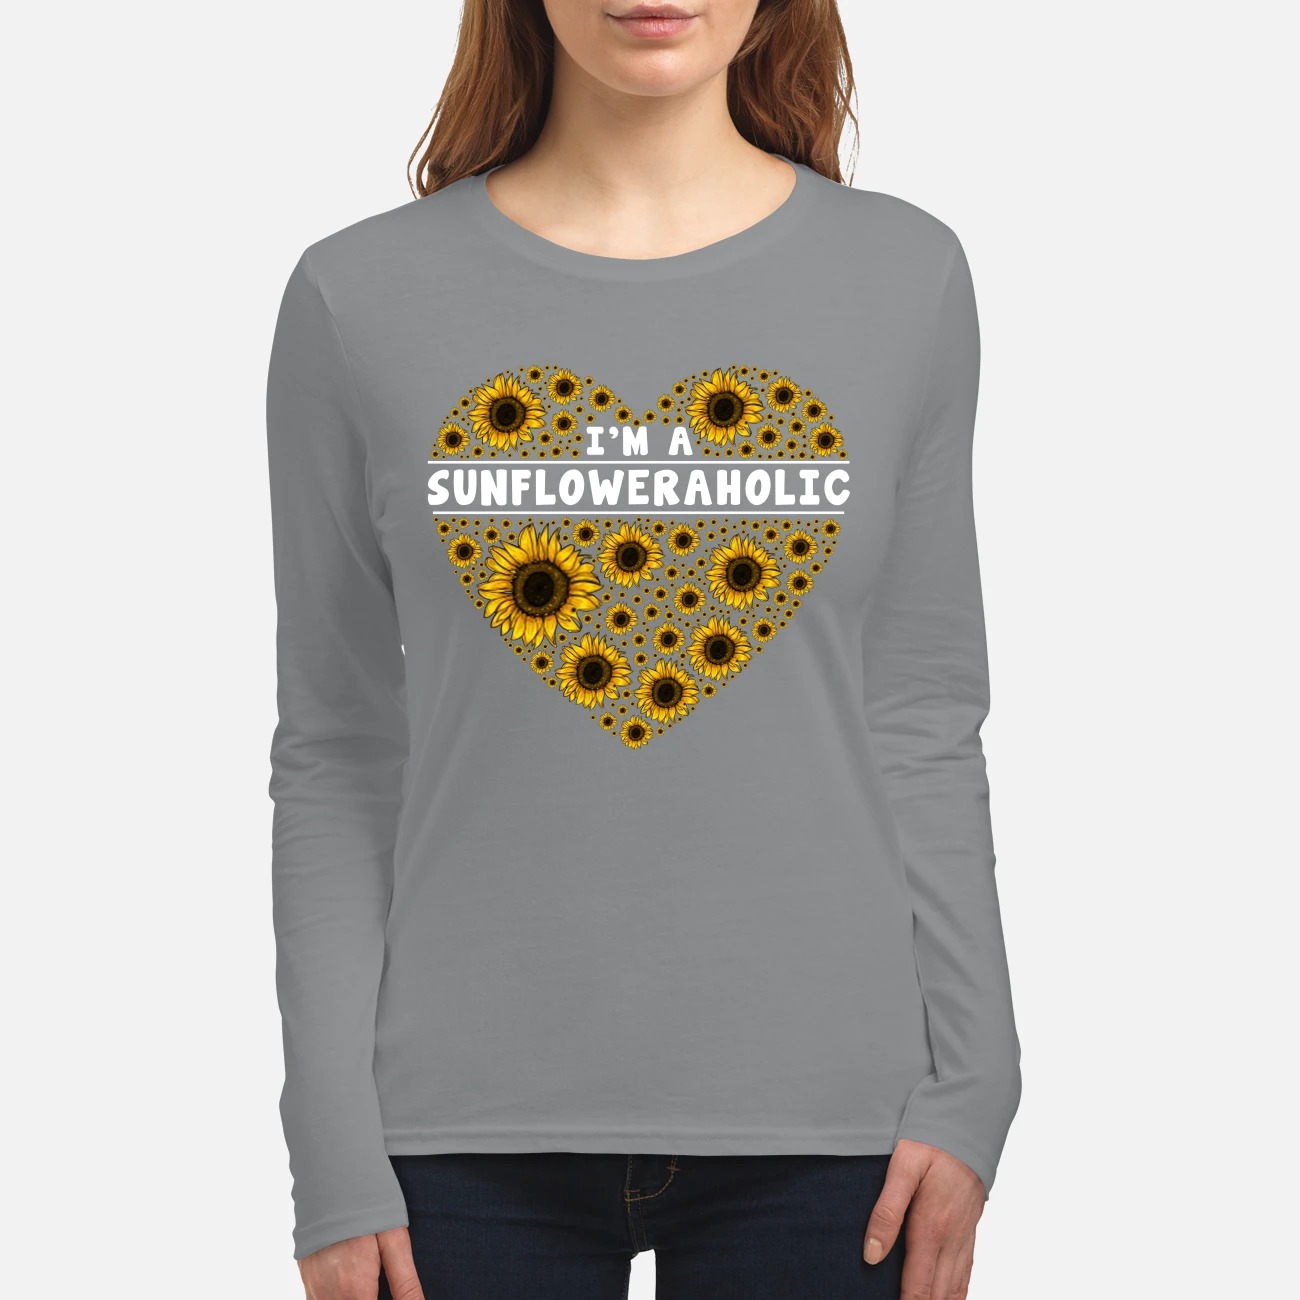 I'm a sunfloweraholic women's long sleeved shirt